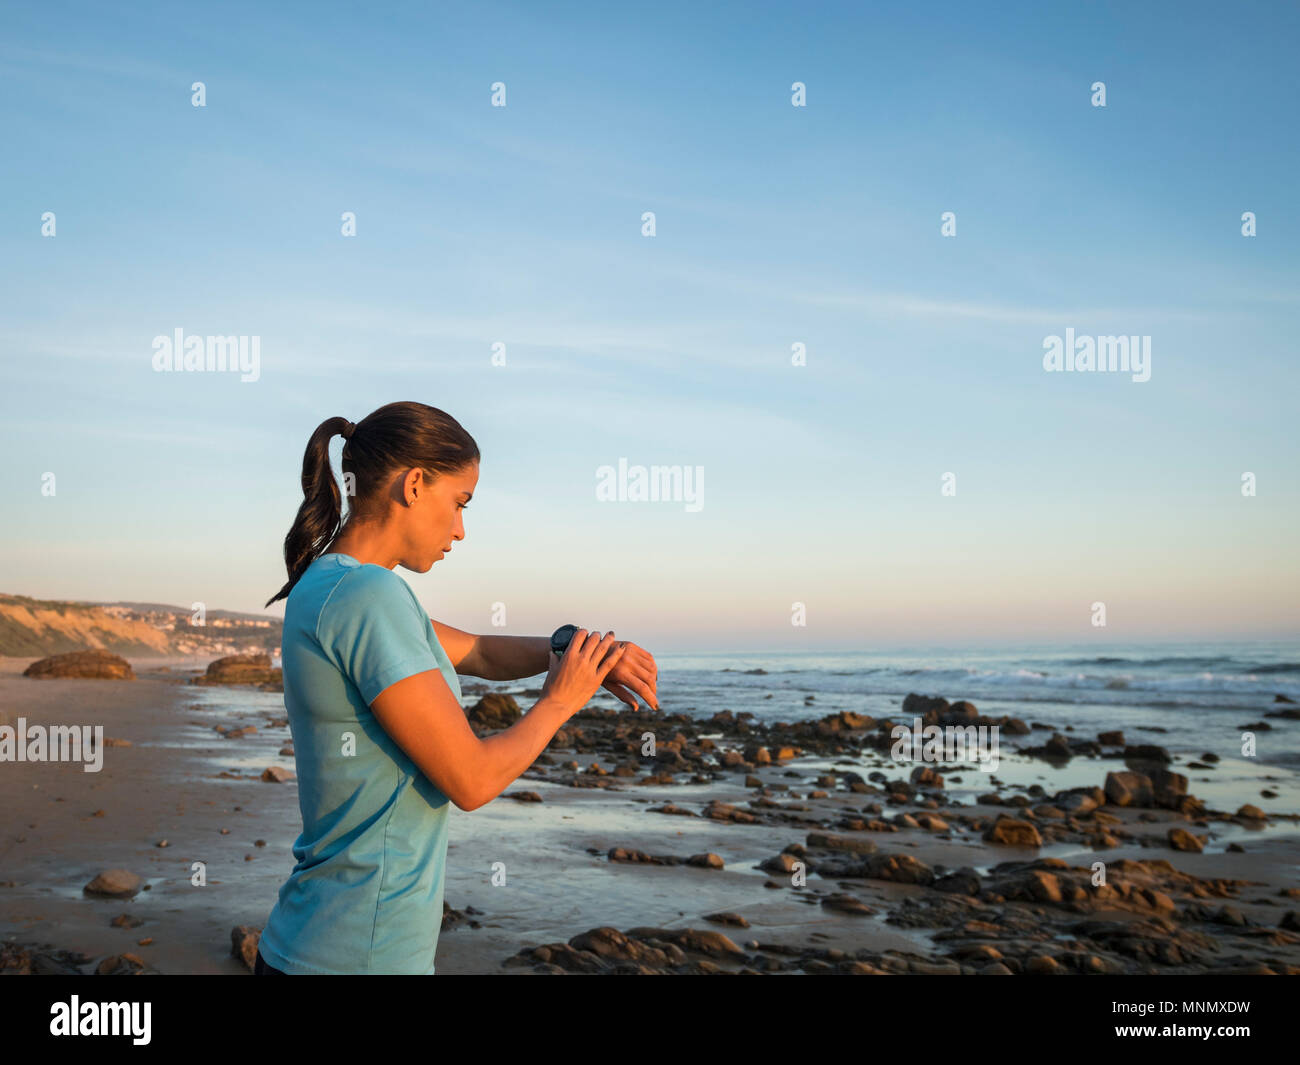 USA, California, Newport Beach, Woman checking smart watch Stock Photo